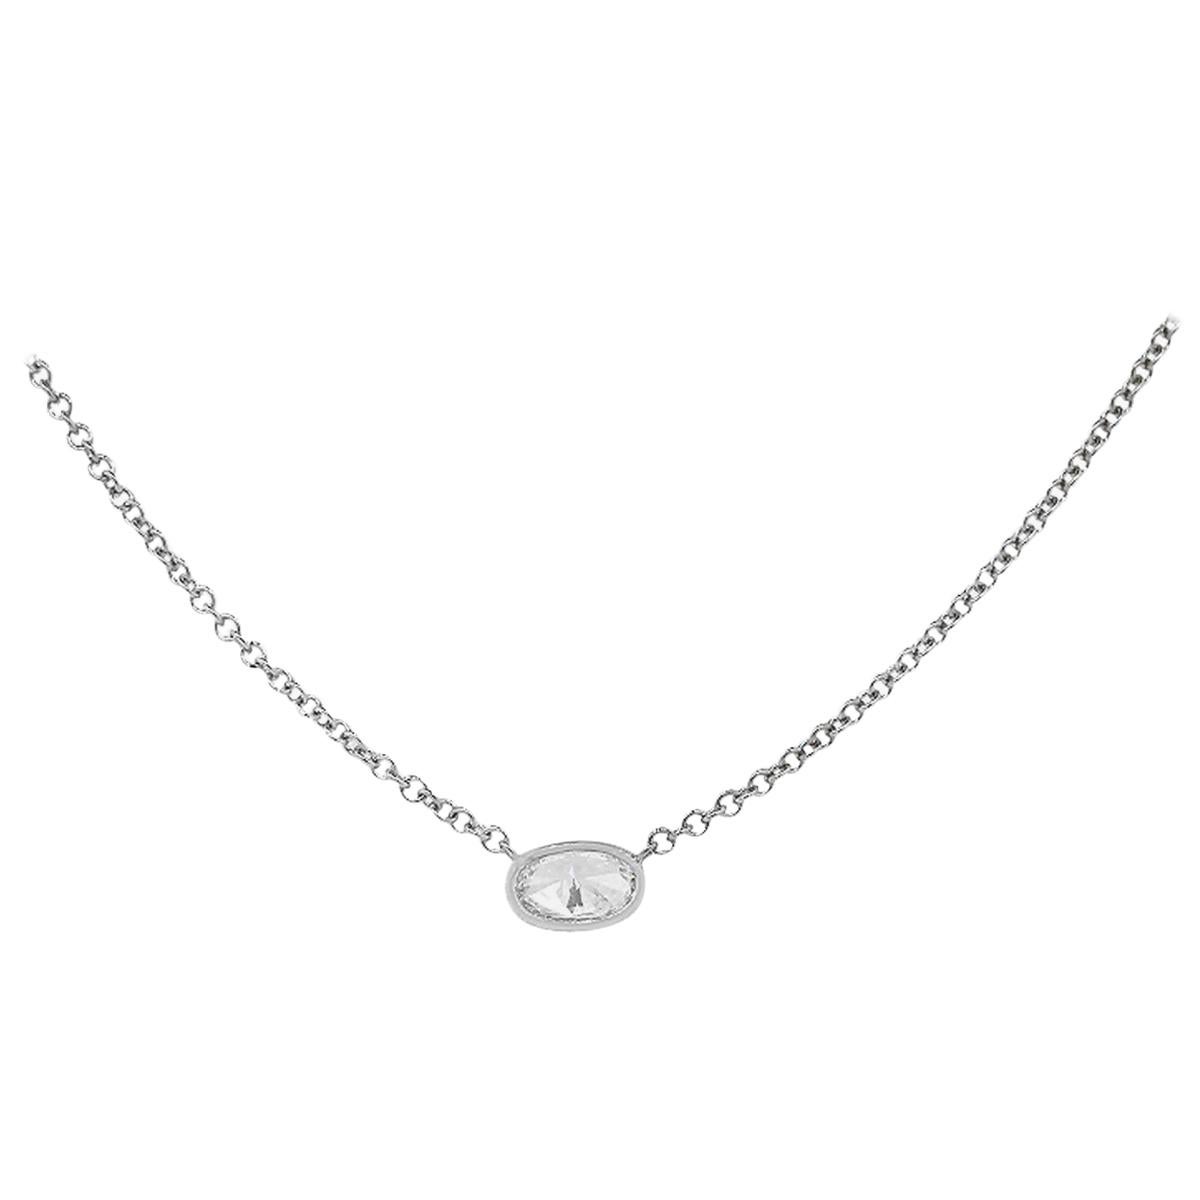 Oval Cut Bezel Set Diamond Necklace